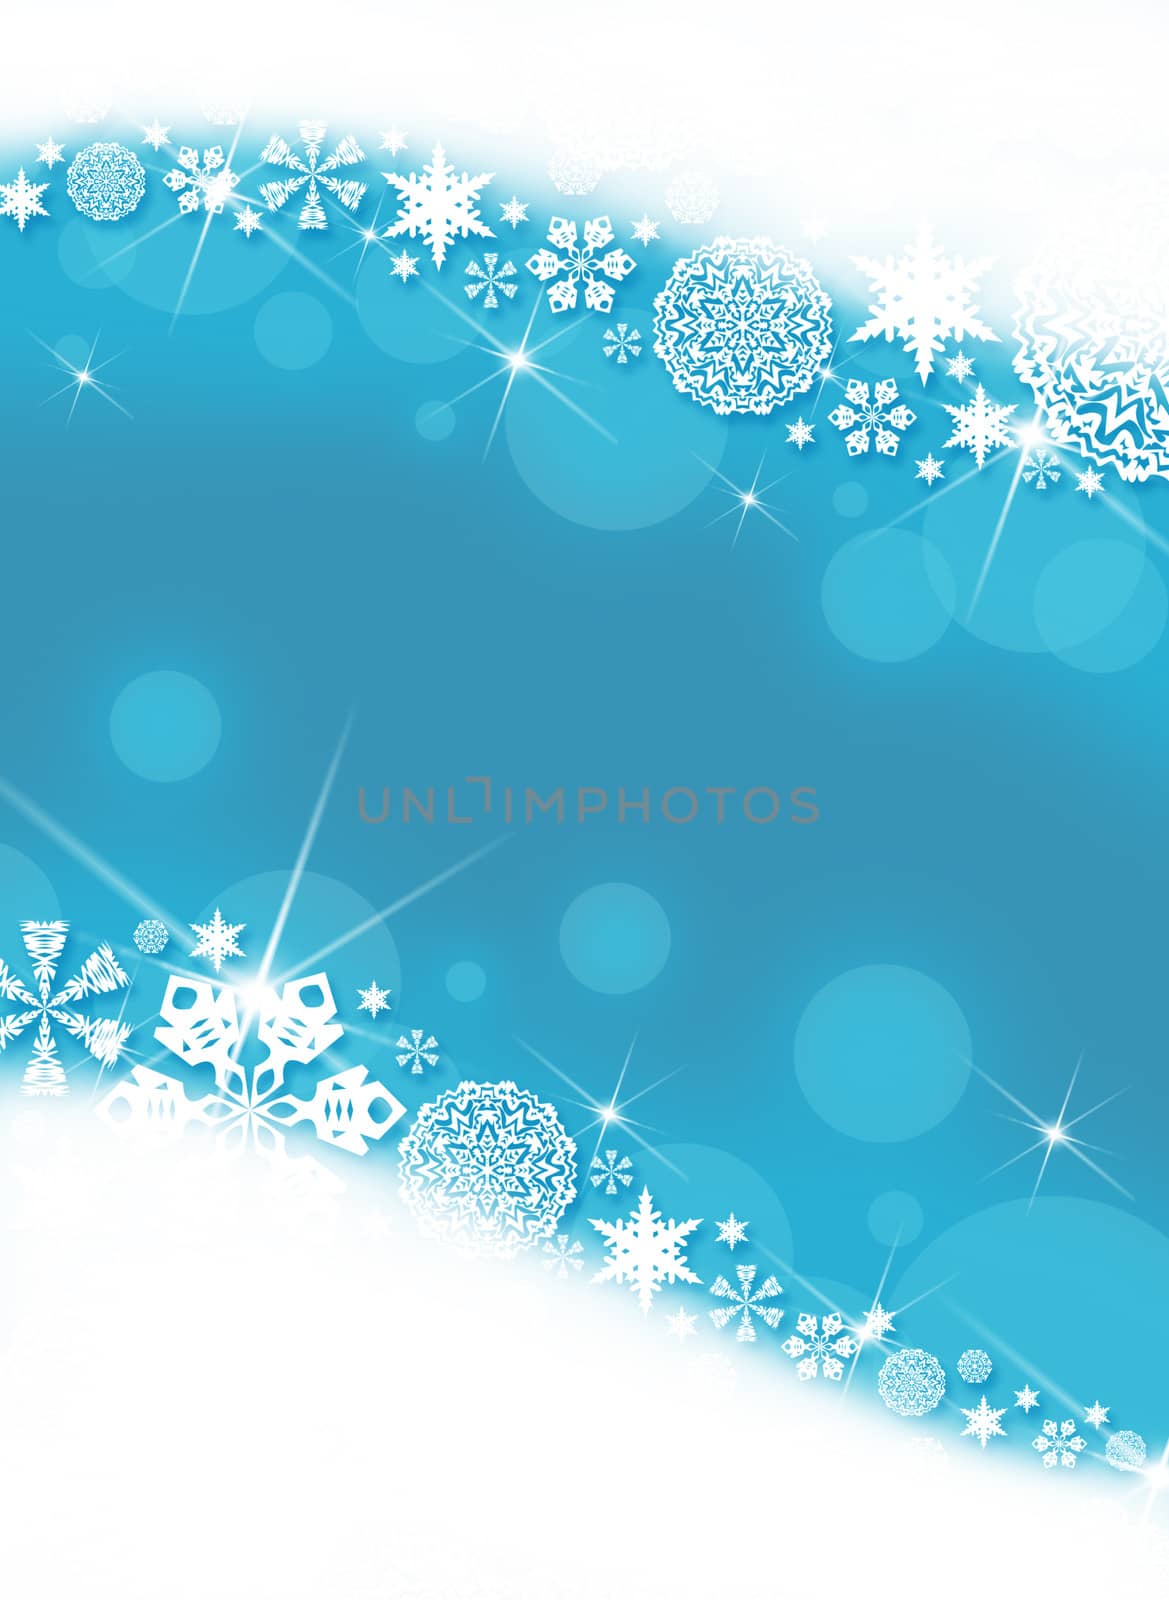 Christmas frame. White snowflakes on a blue background